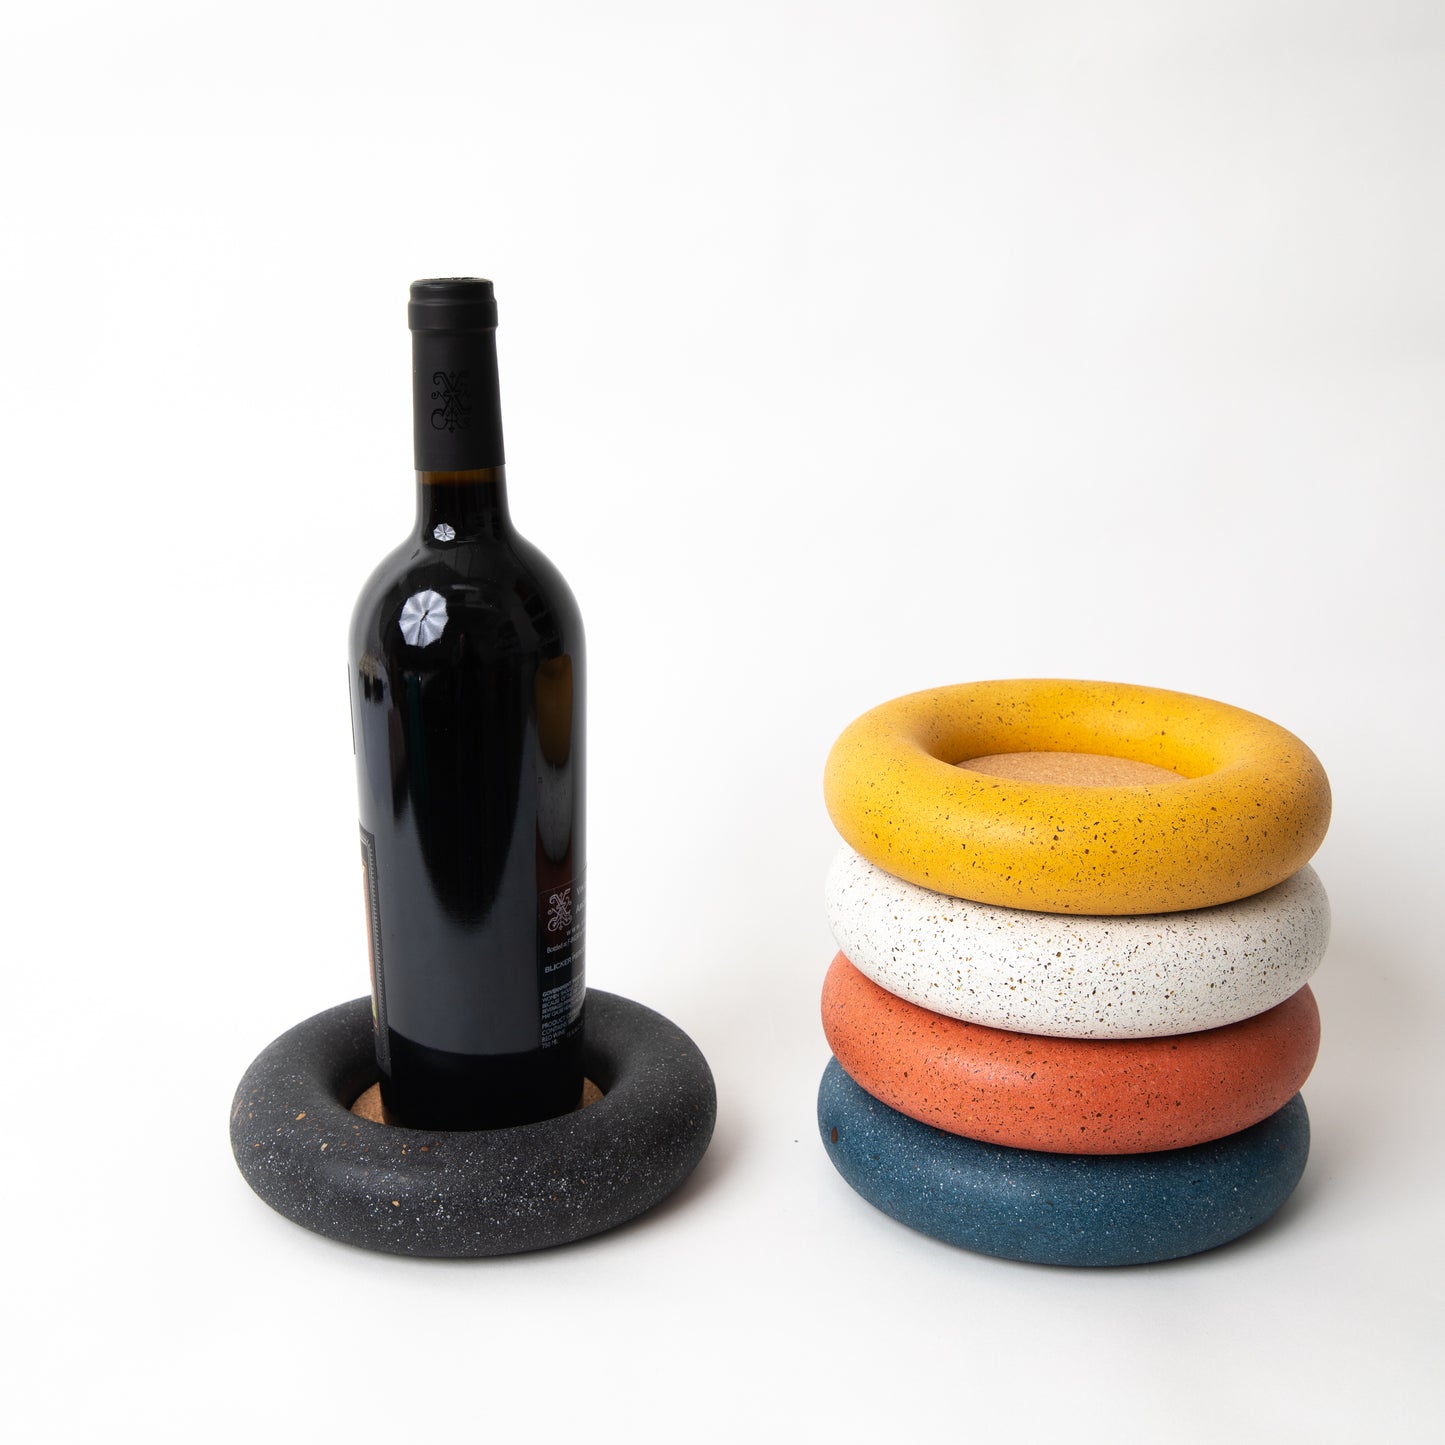 Concrete terrazzo wine bottle coaster in various colors.